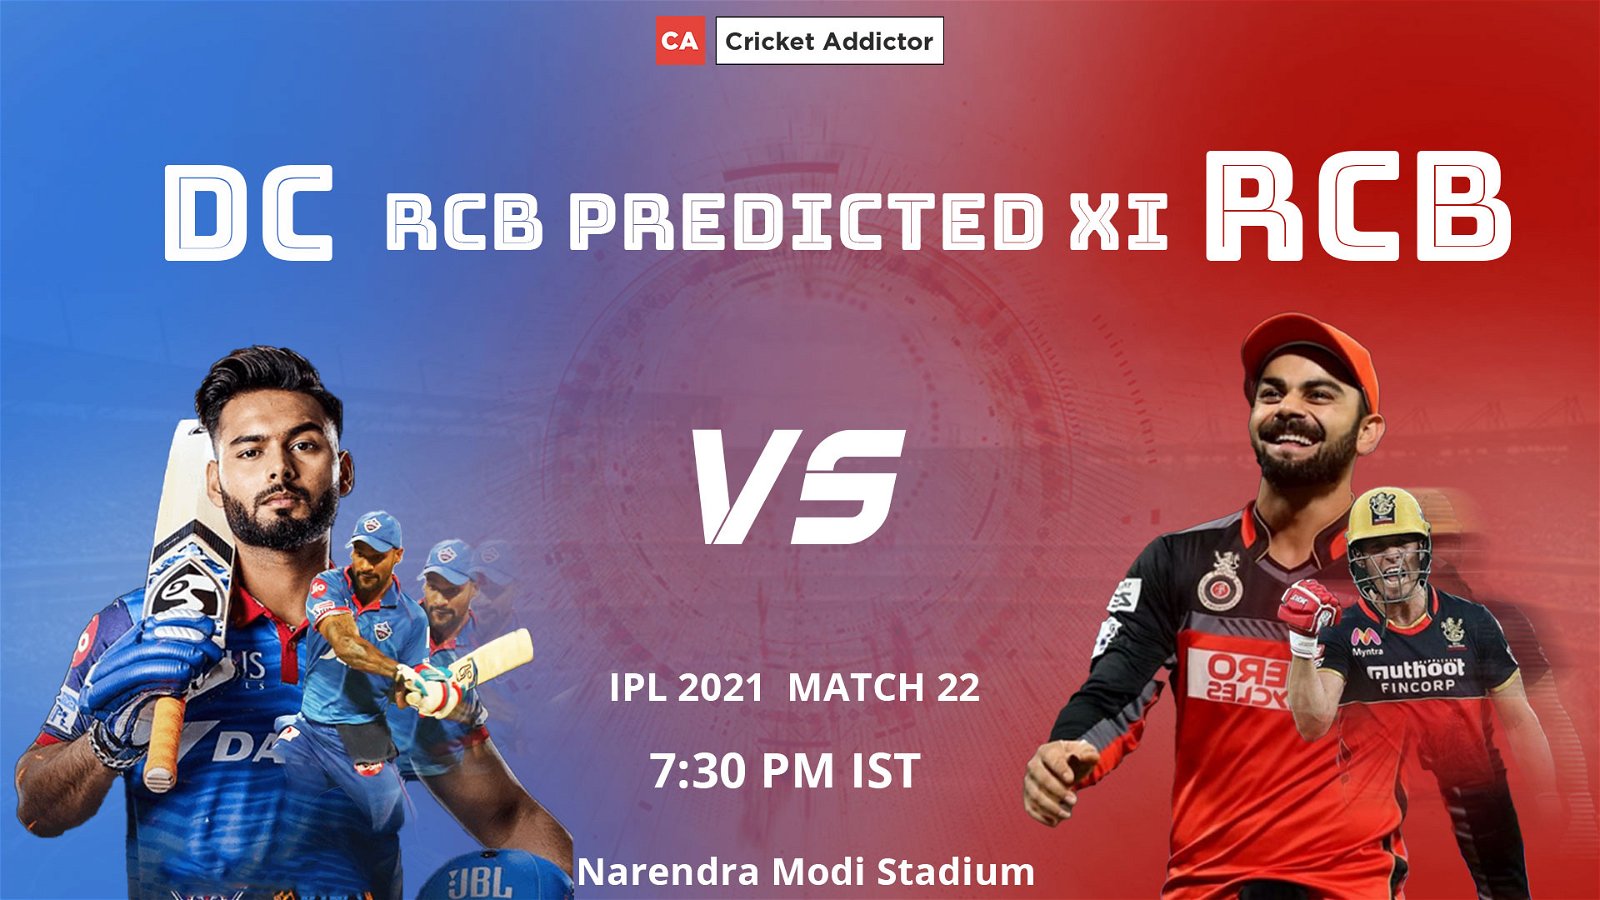 IPL 2021, Royal Challengers Bangalore, RCB, DC vs RCB, predicted playing XI, playing XI